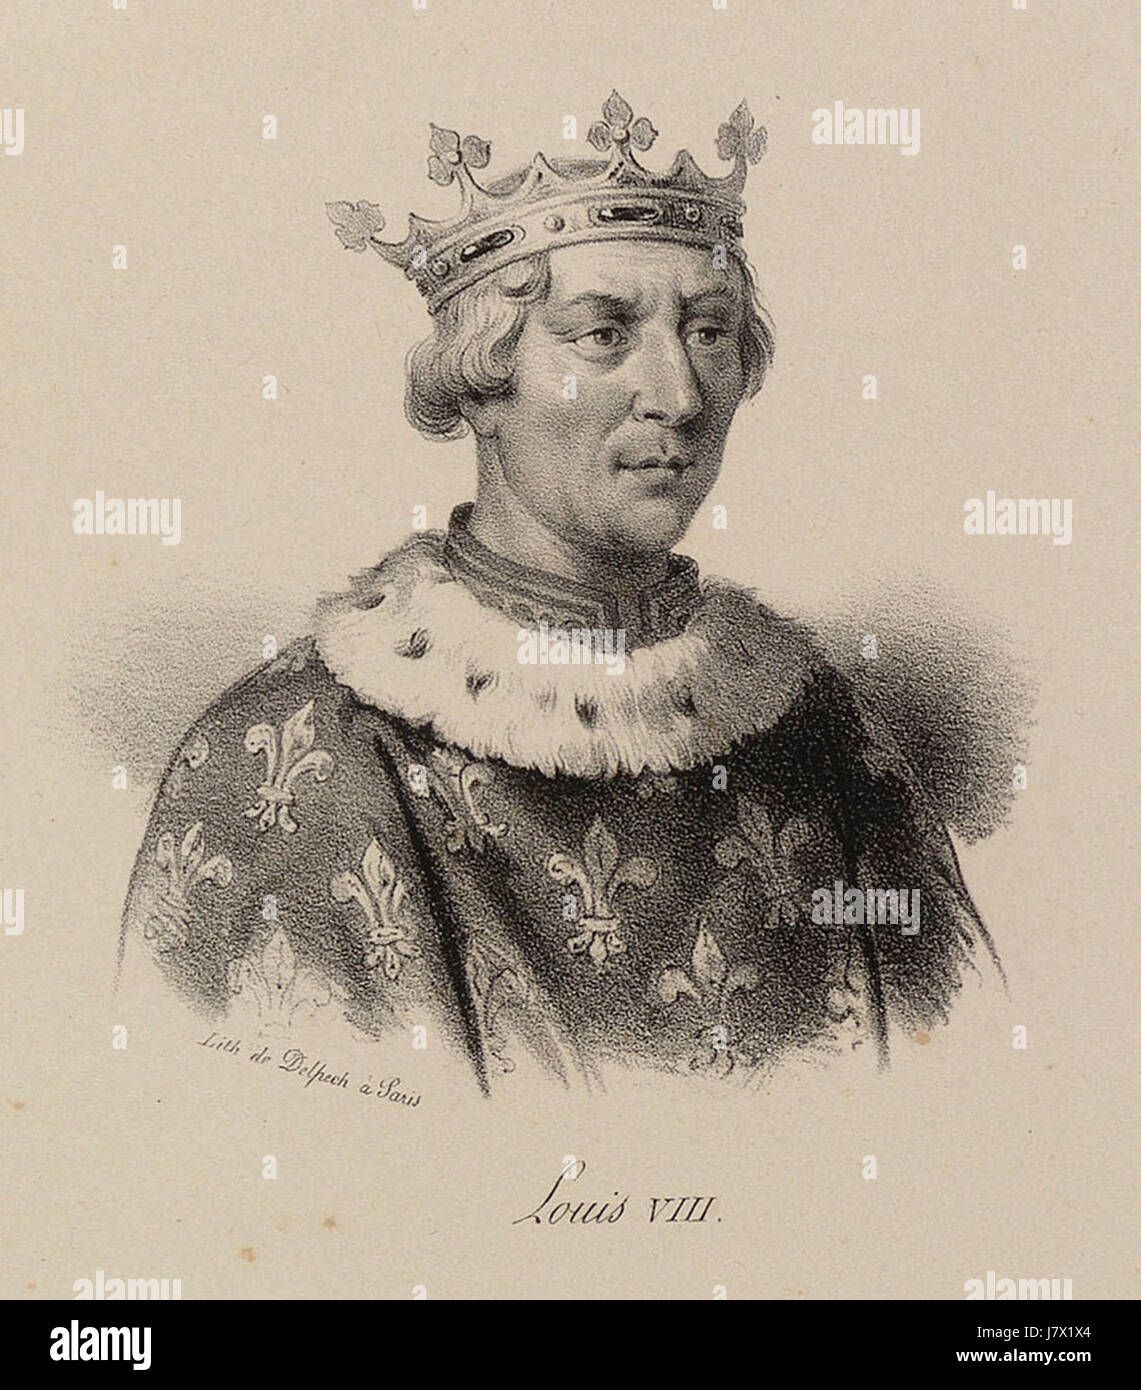 Delpech Louis VIII de Francia Foto de stock